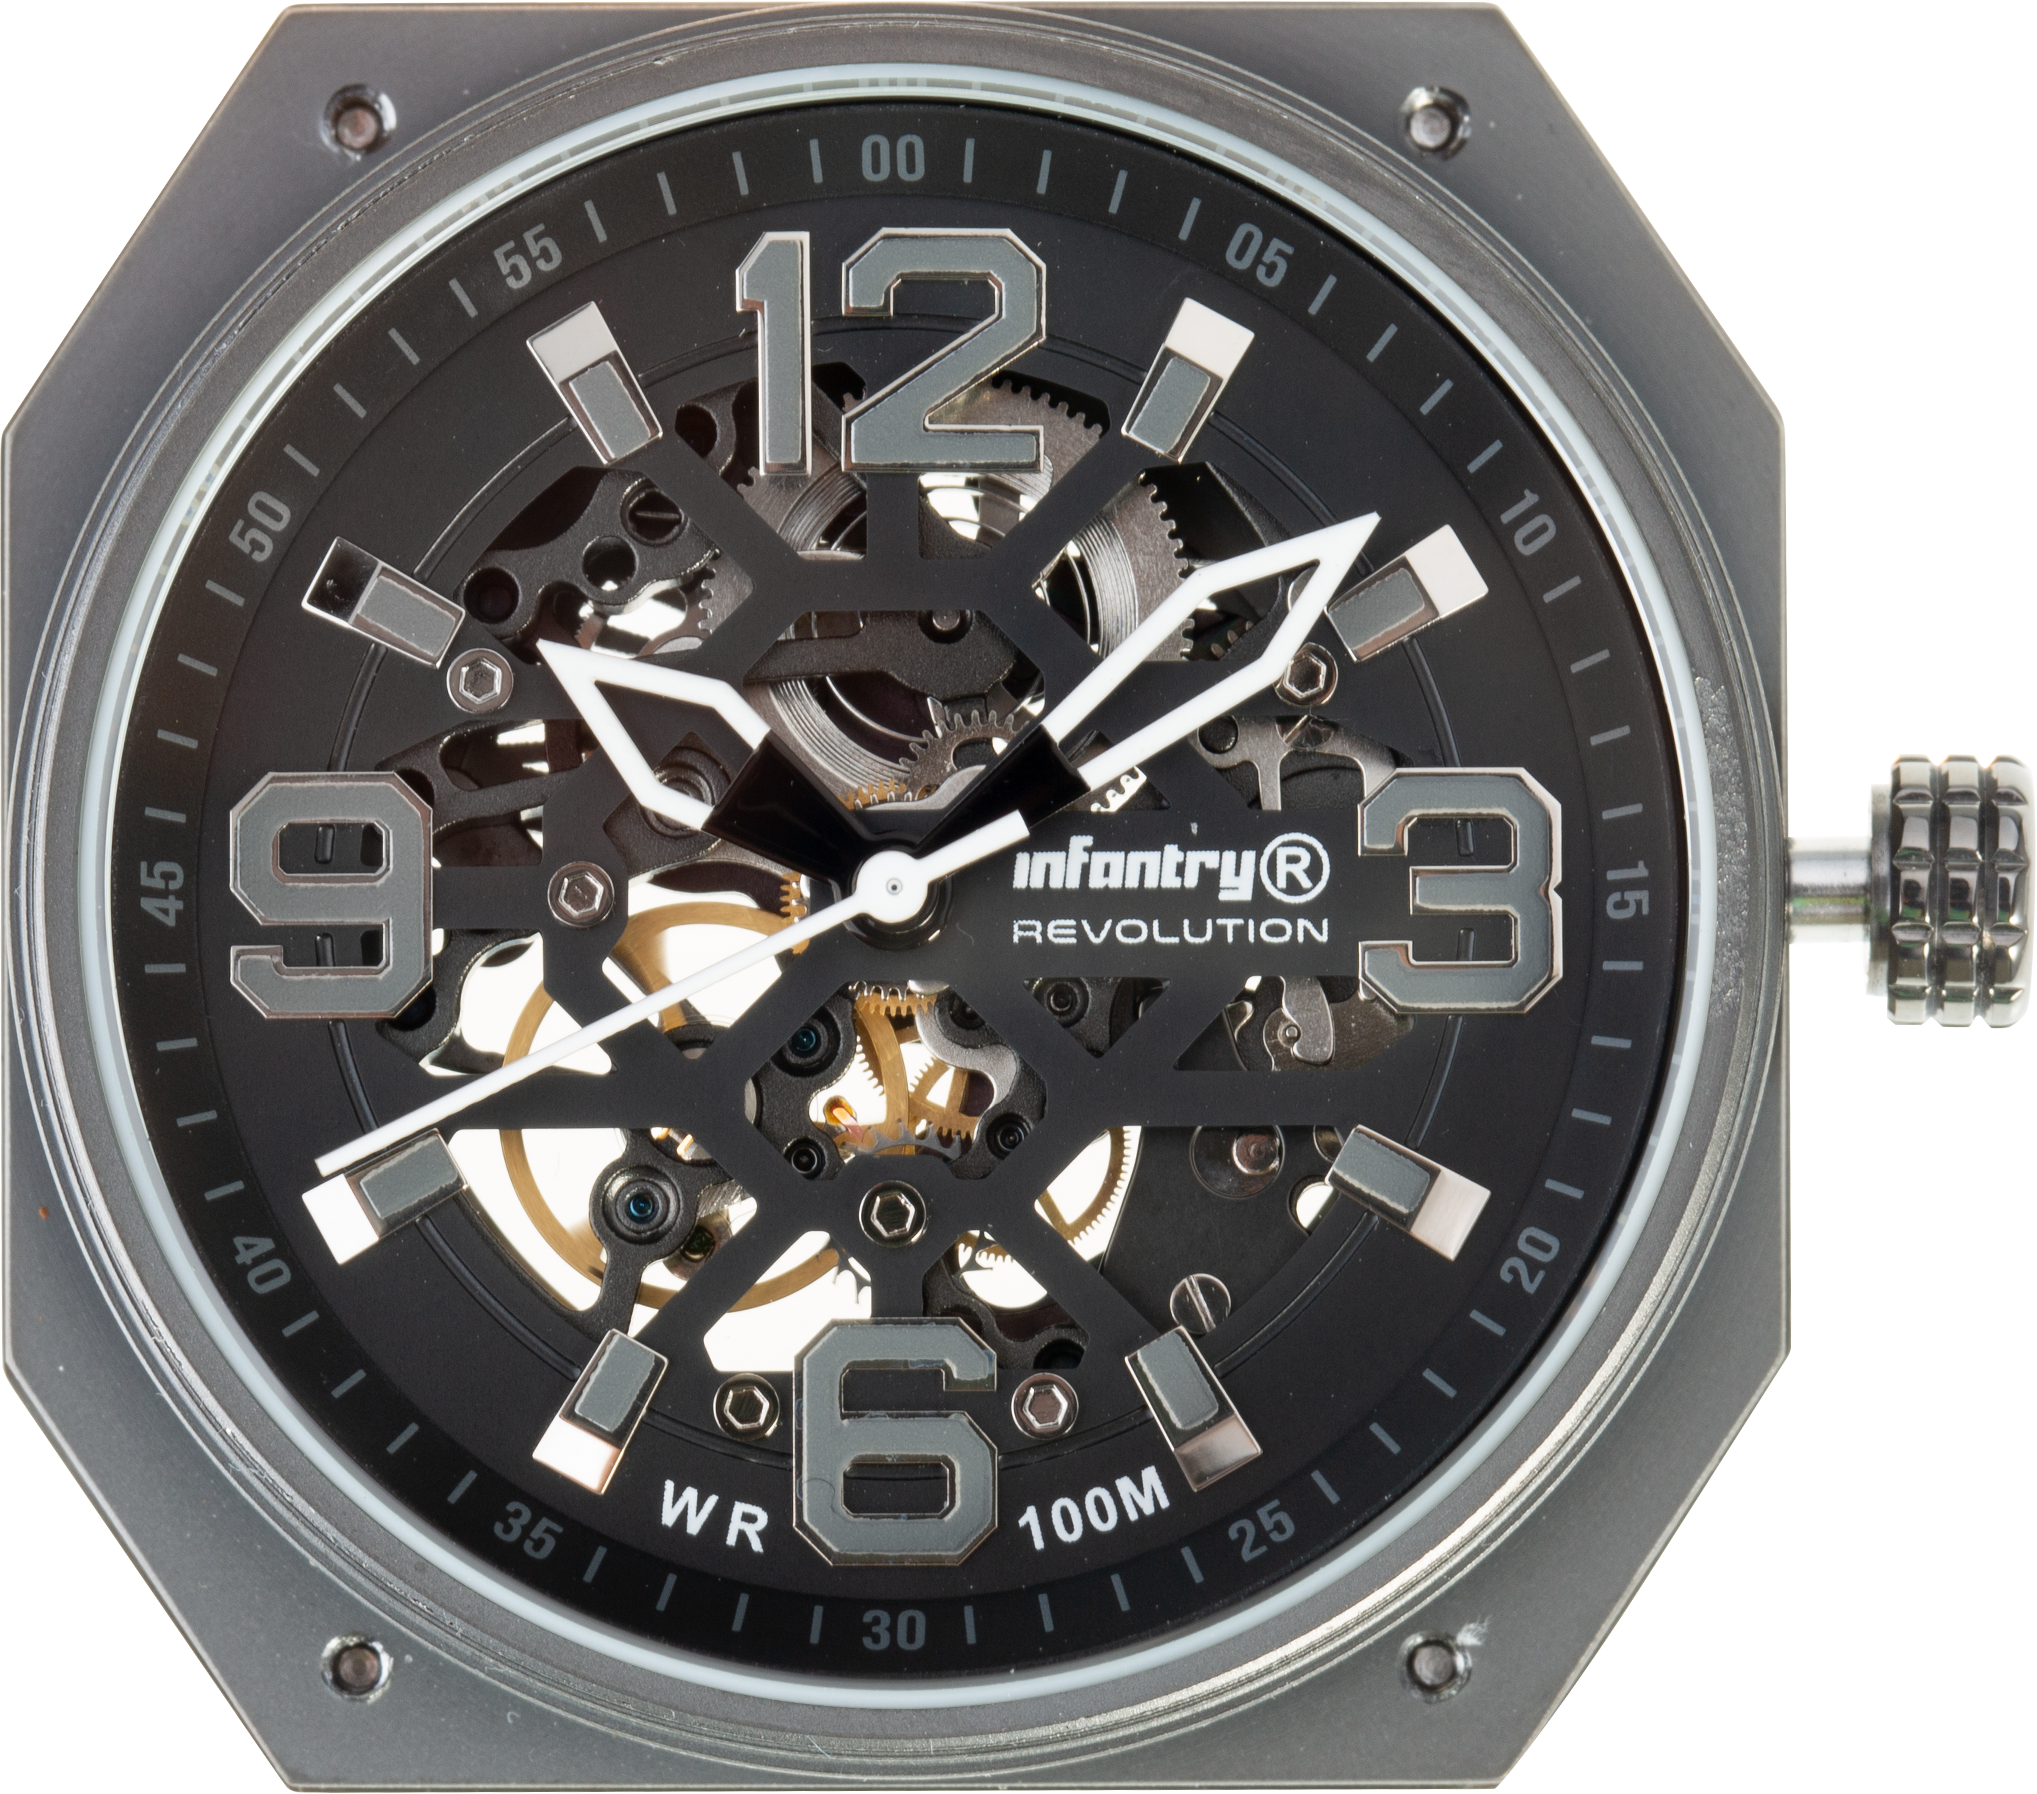 MOD 47 - watch movement - black-and-grey